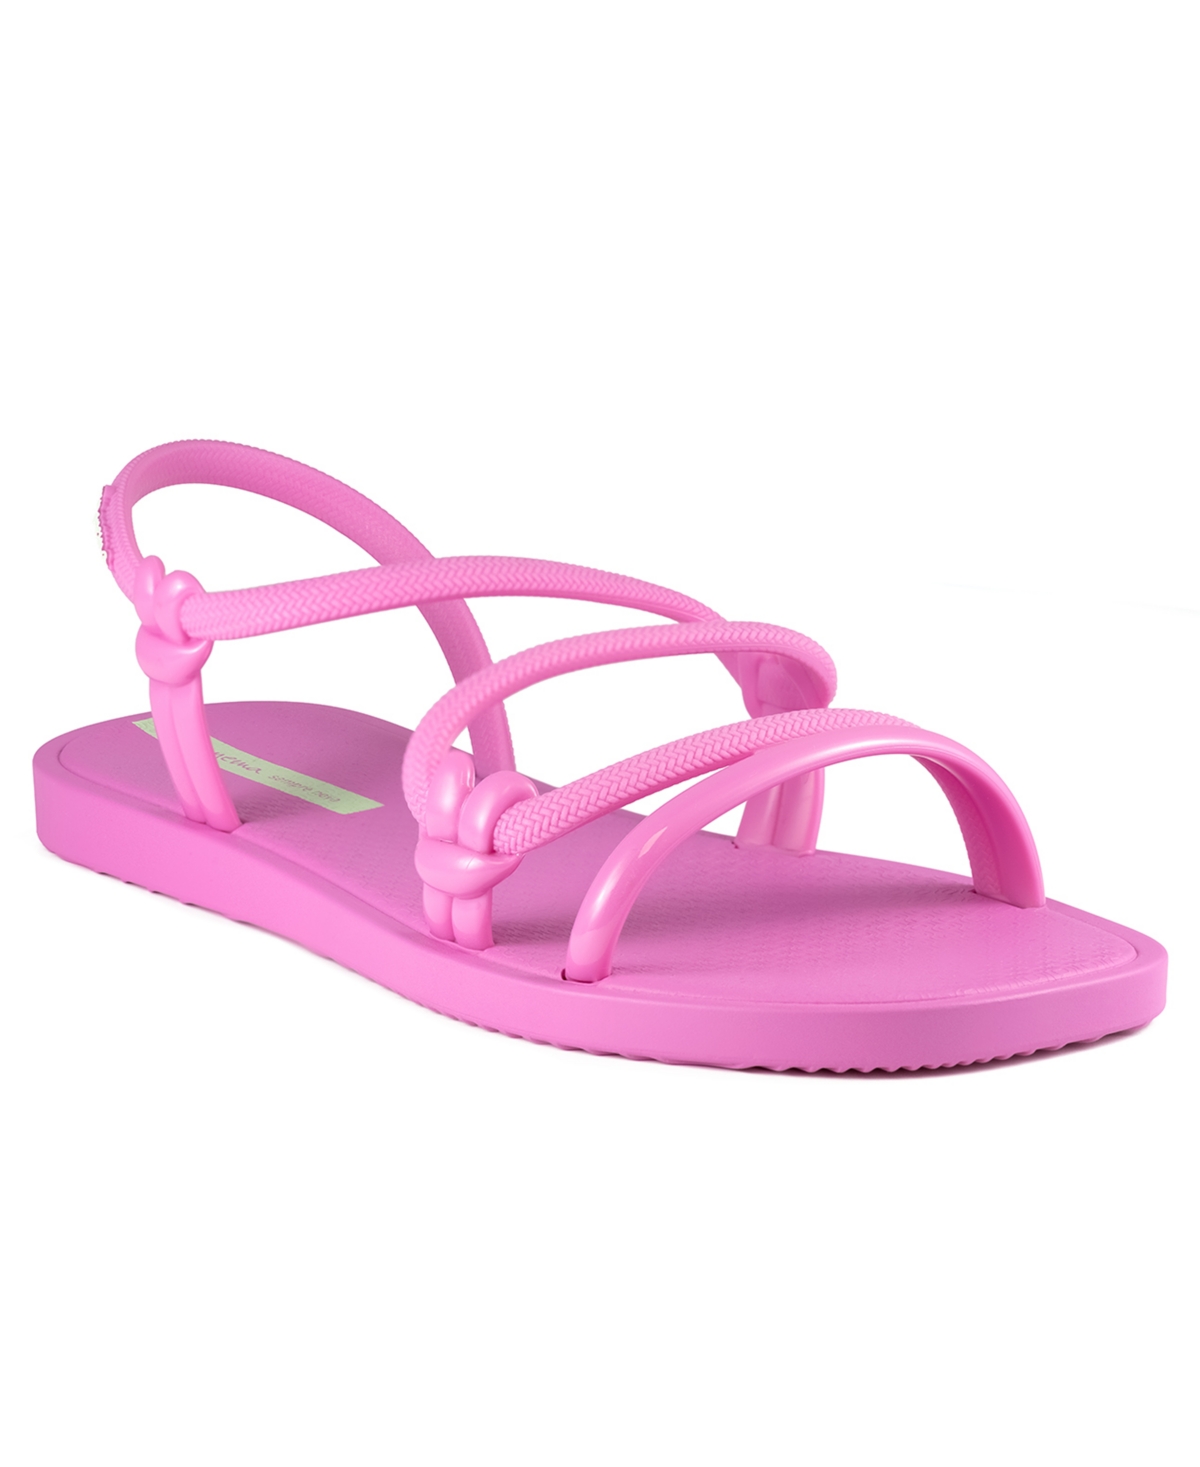 Women's Solar Comfort Flat Sandals - Lilac, Lilac